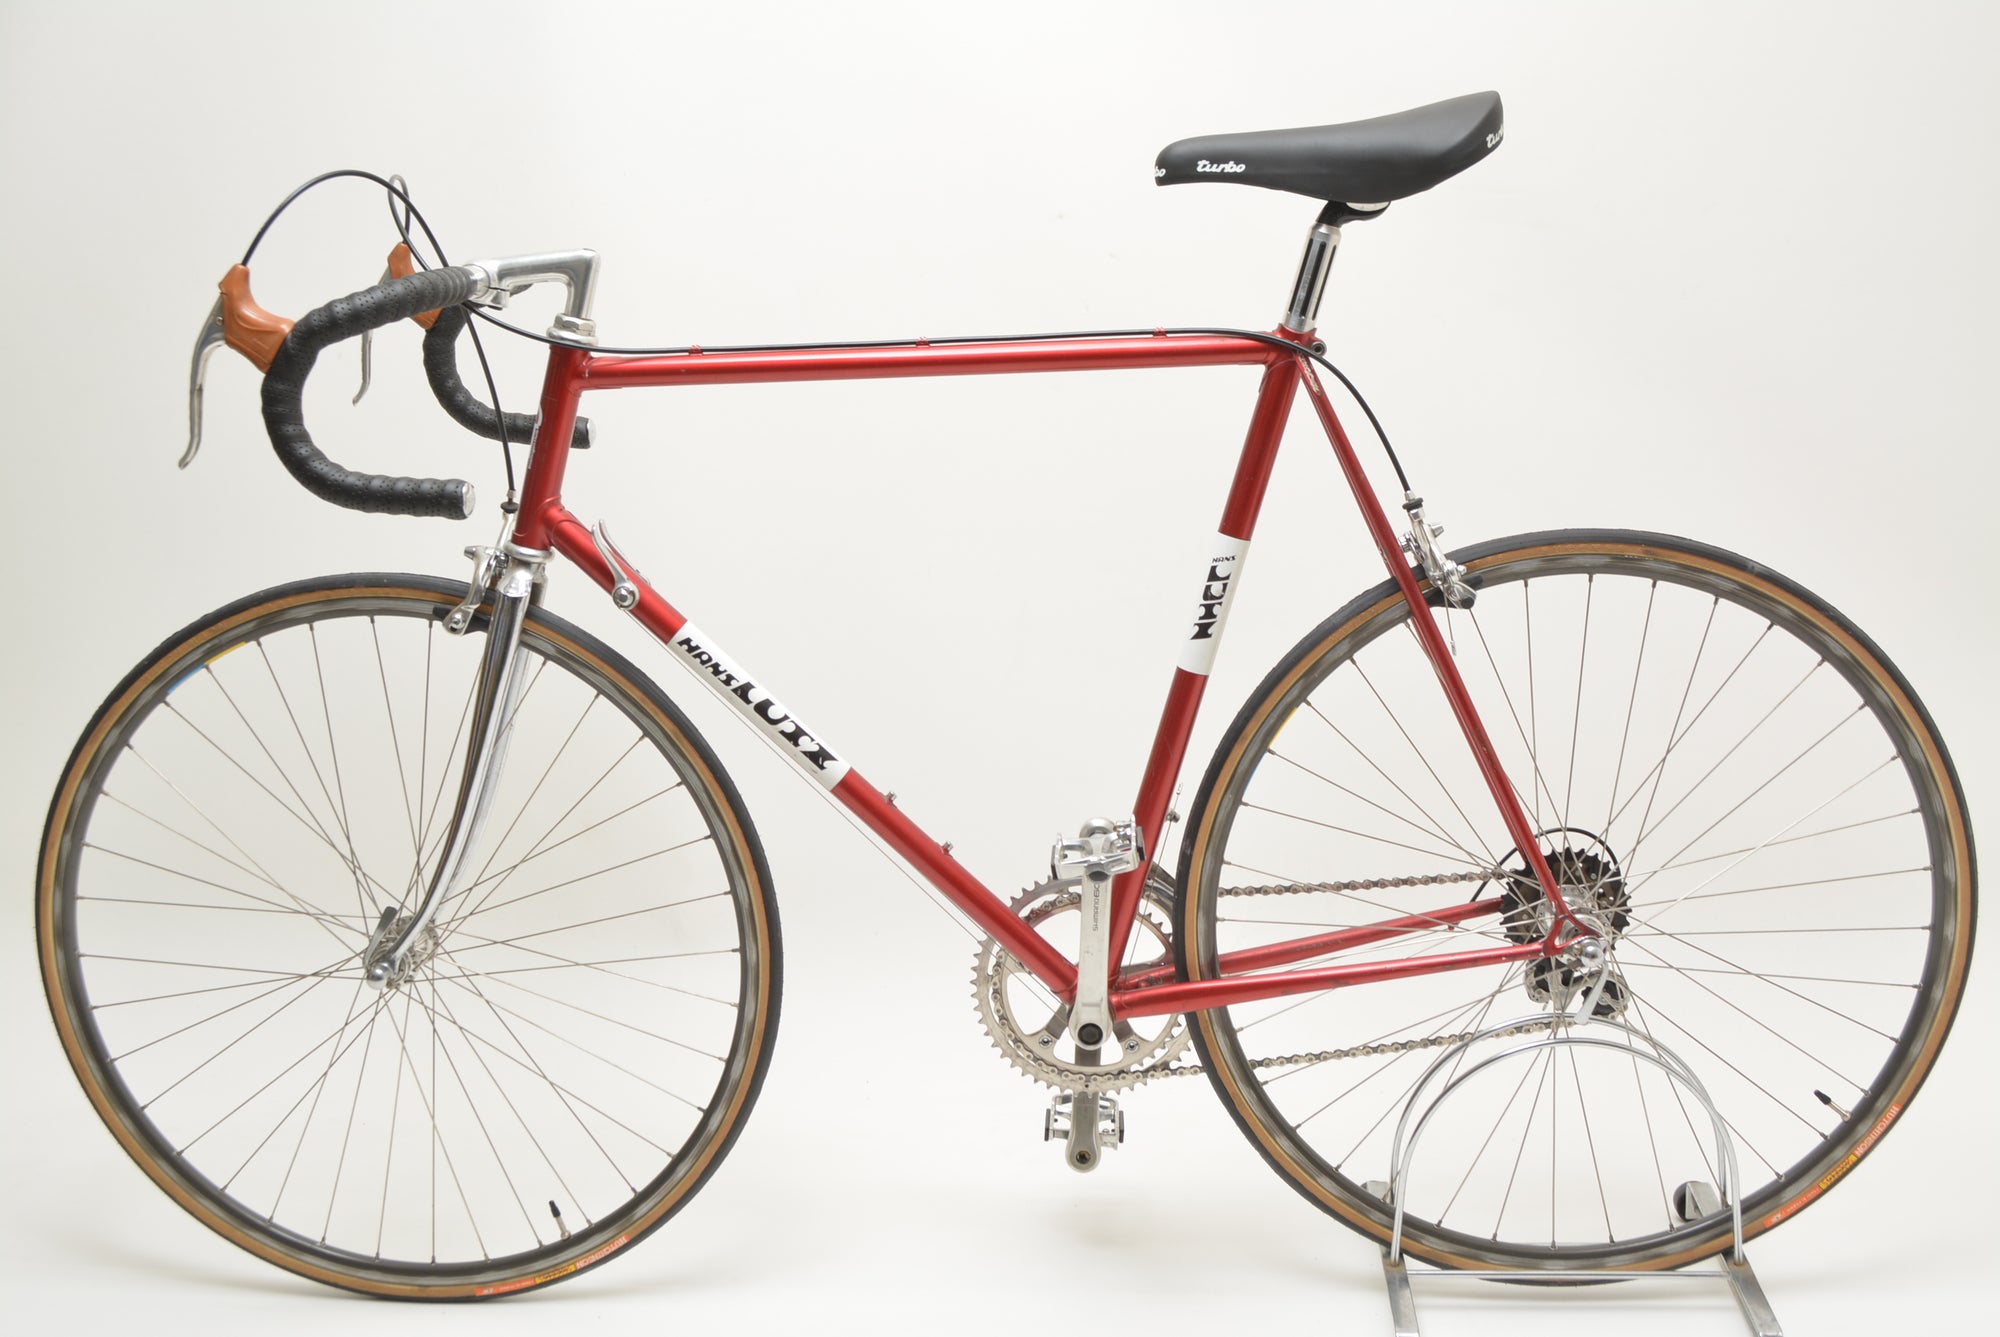 Hans Lutz Rennrad 58cm Shimano 600 Vintage Roadbike L'Eroica